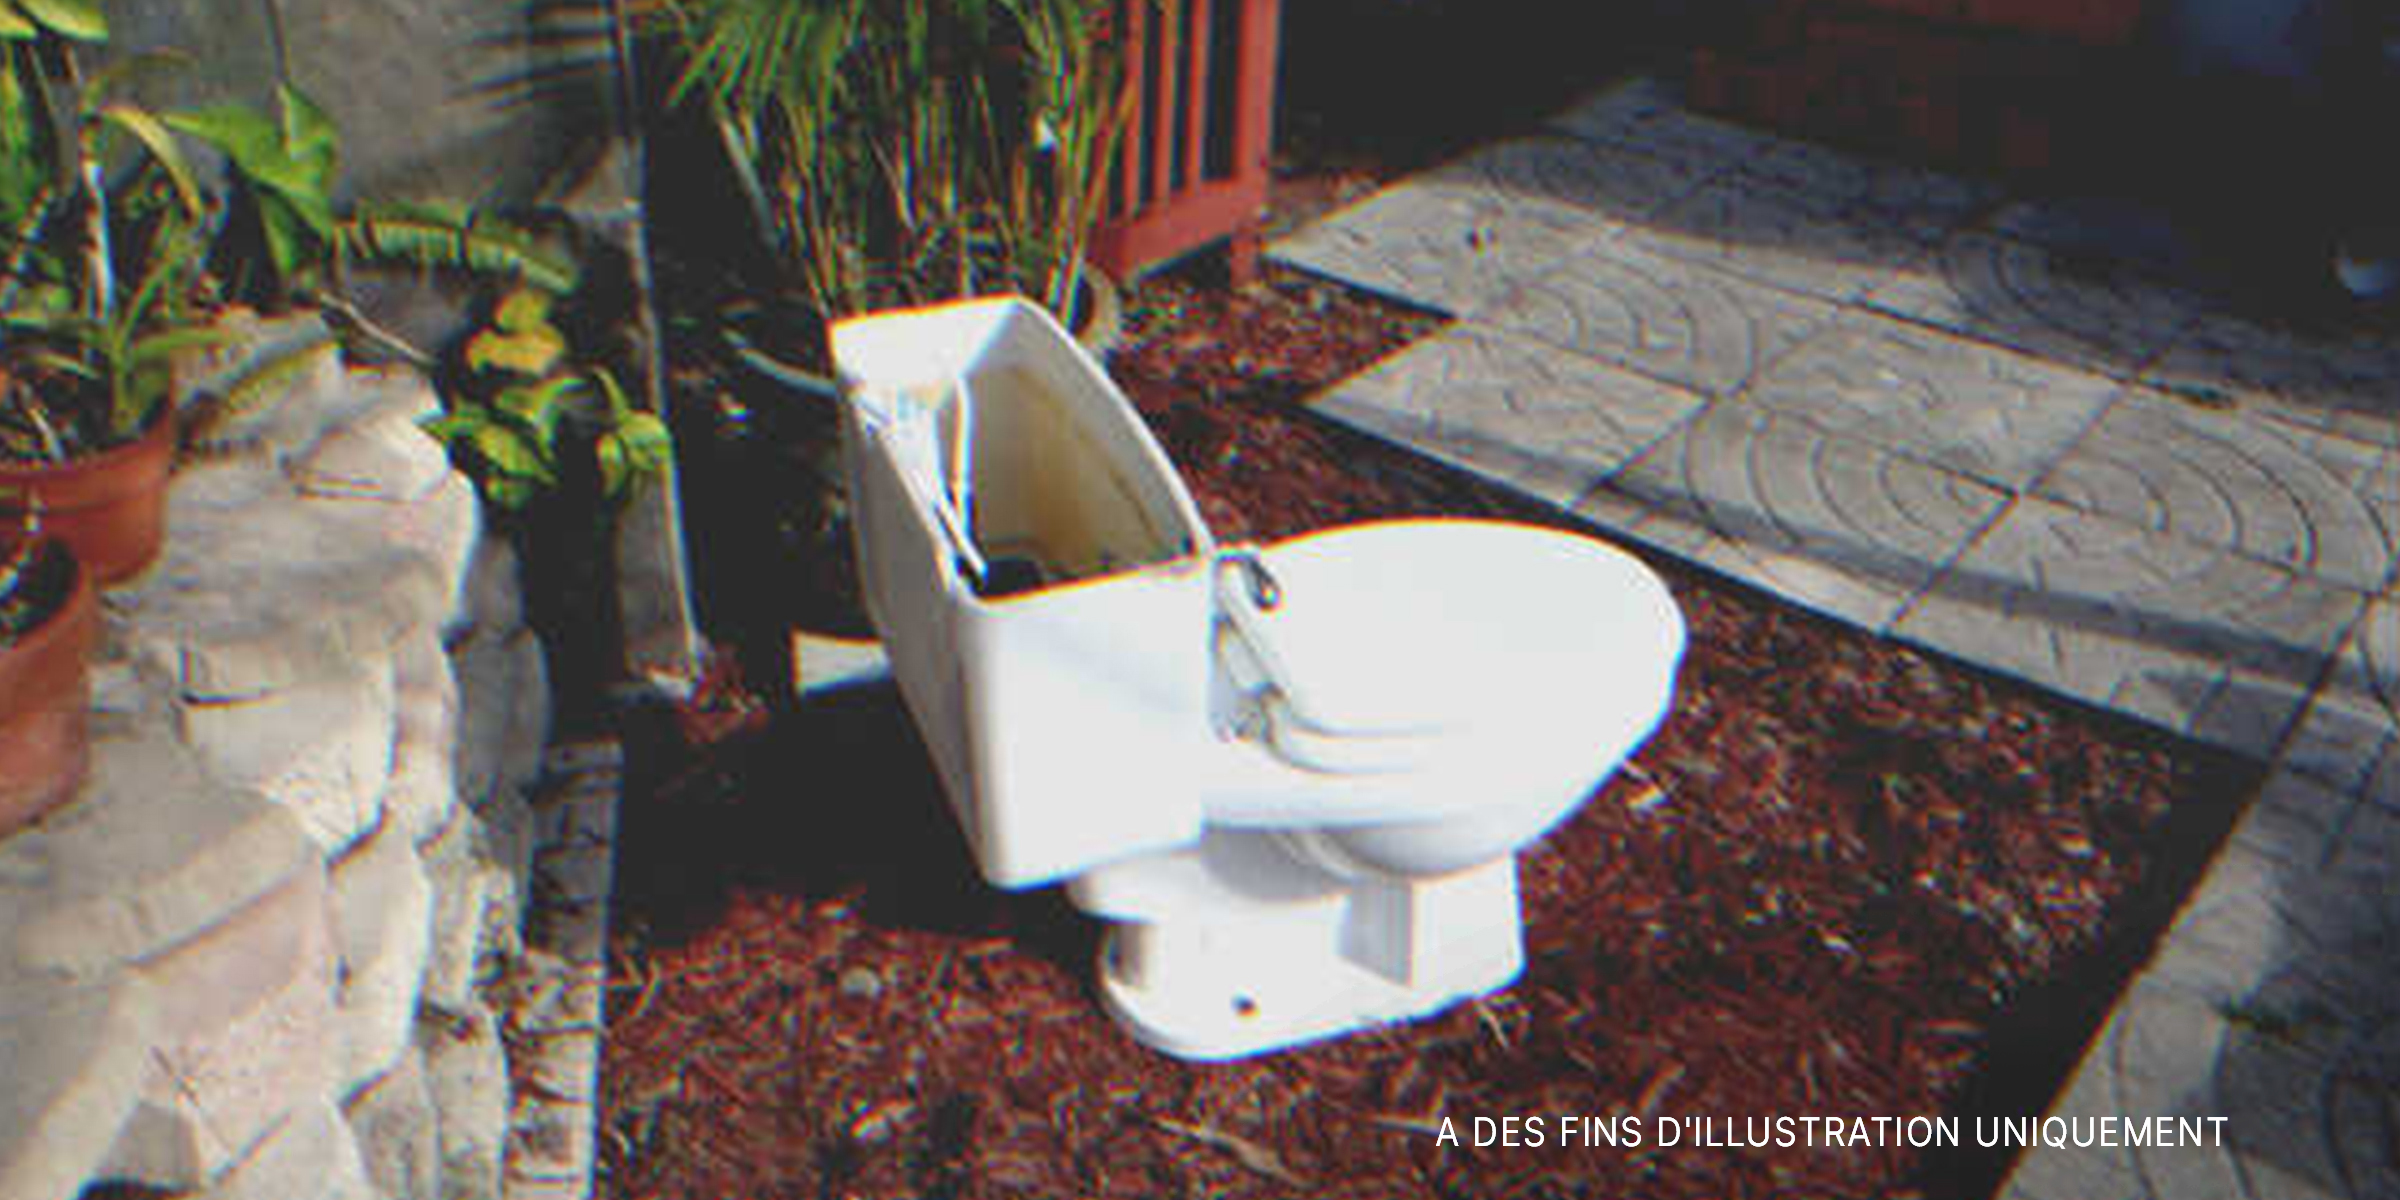 Toilette mise en vente | Source : Flickr / osseous